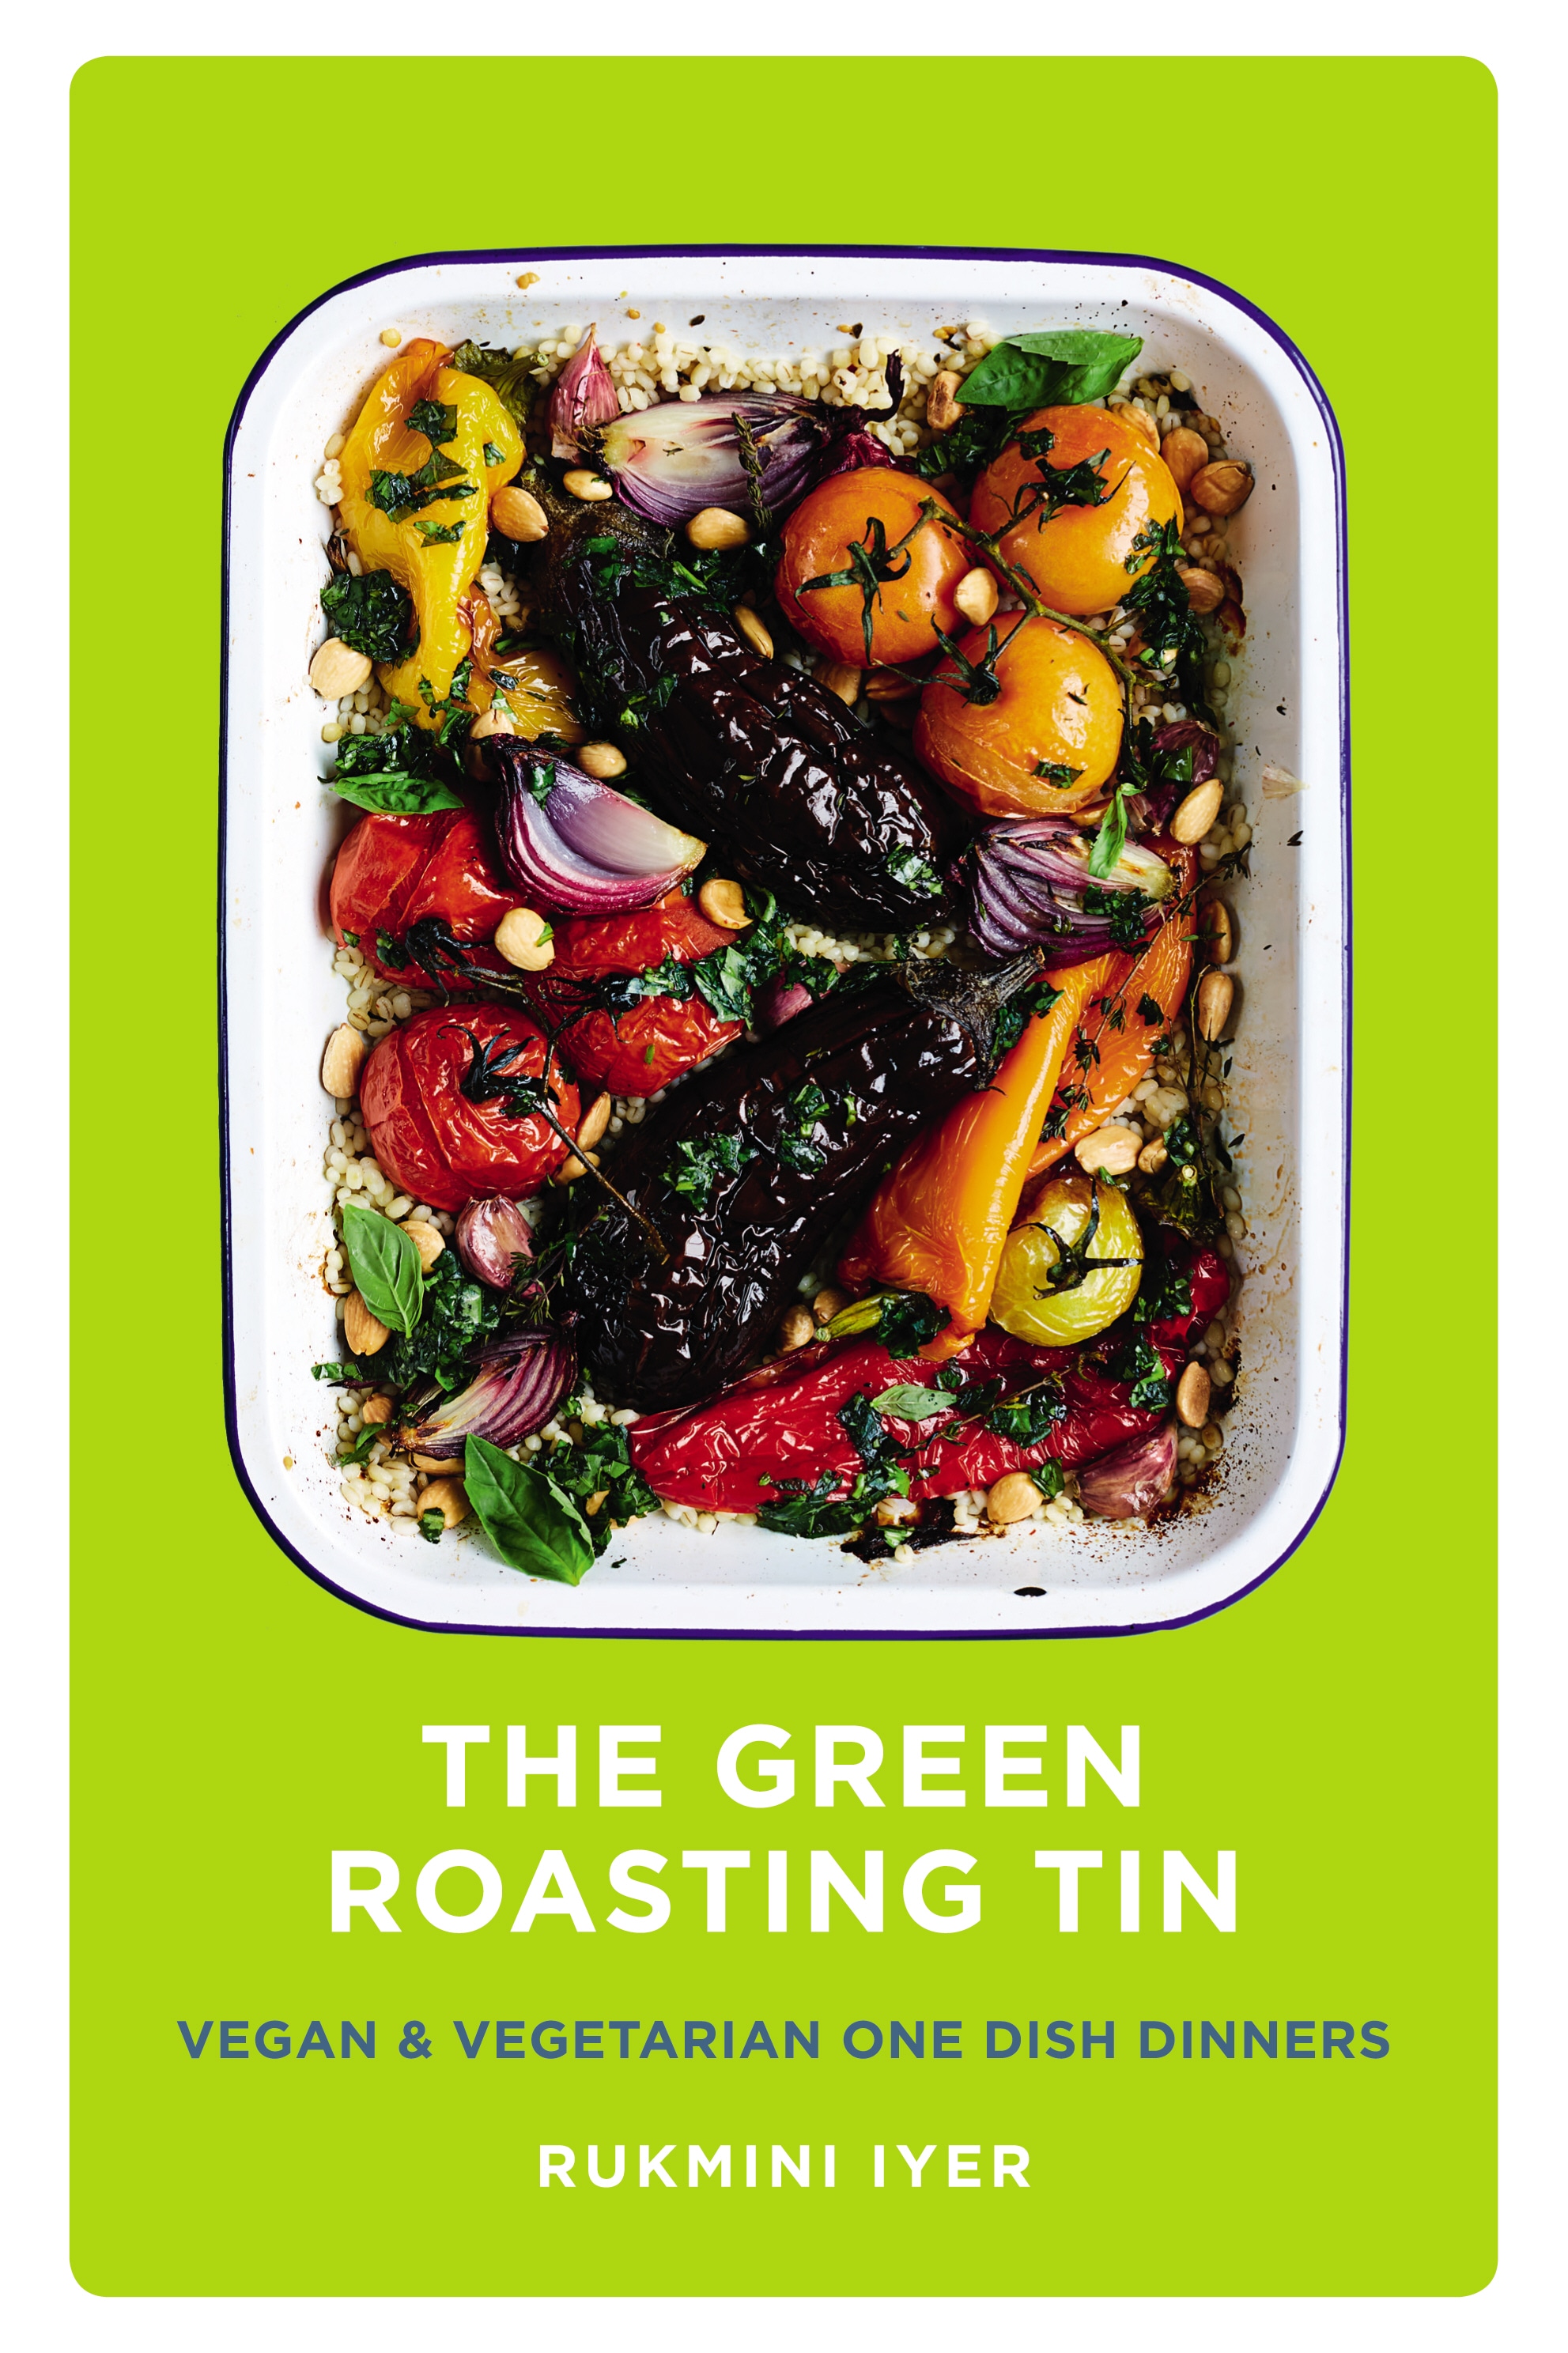 Book “The Green Roasting Tin” by Rukmini Iyer — July 5, 2018